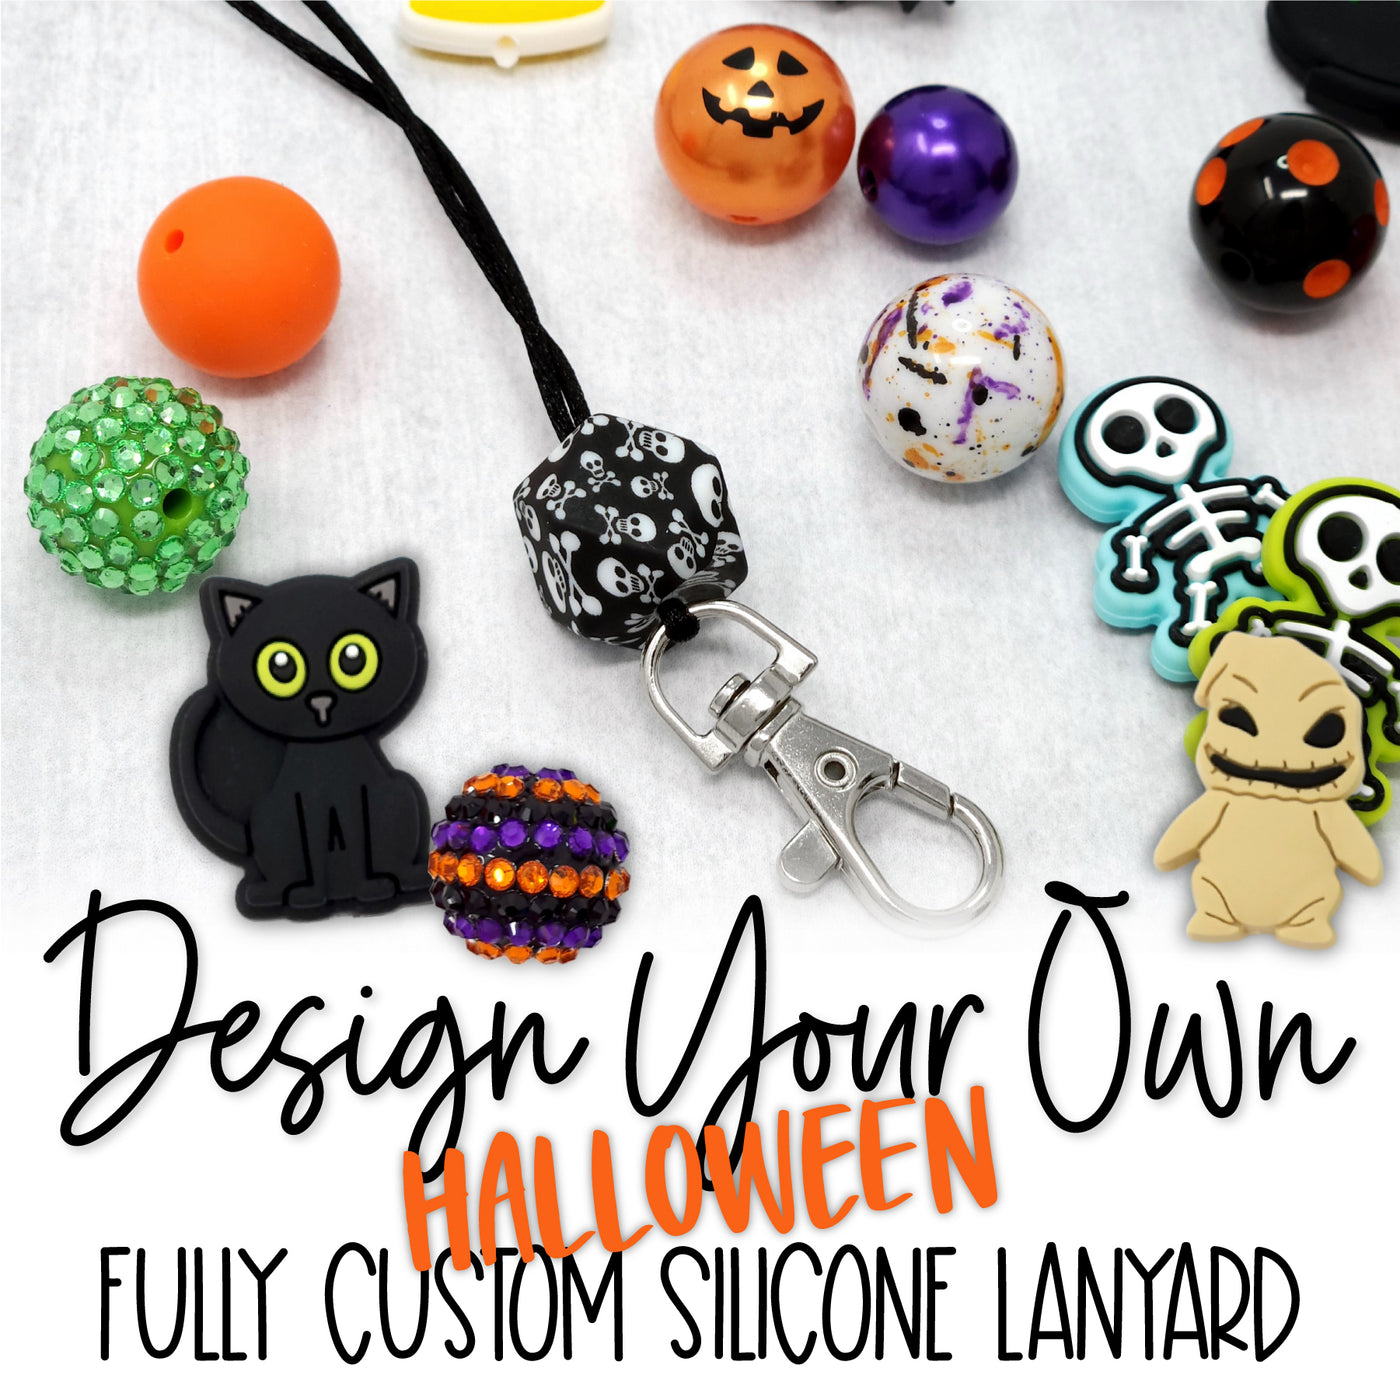 Fully Custom Halloween Silicone Lanyard